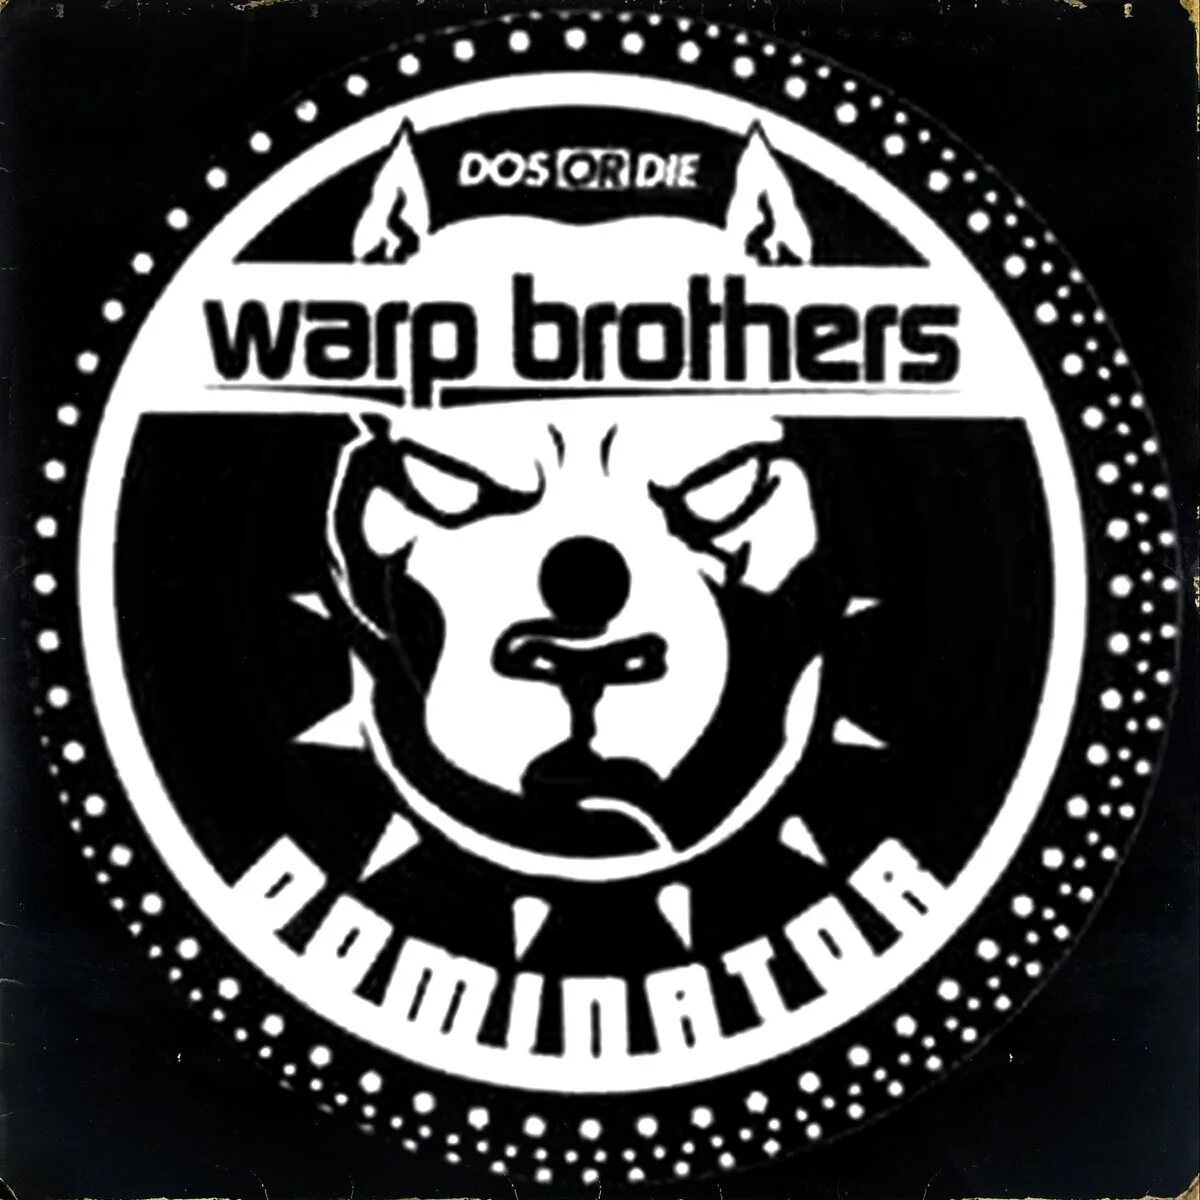 Phatt bass warp. Warp brothers. Warp brothers - phatt Bass. Warp brothers исполнитель группа. Warp brothers Cokane картинки.